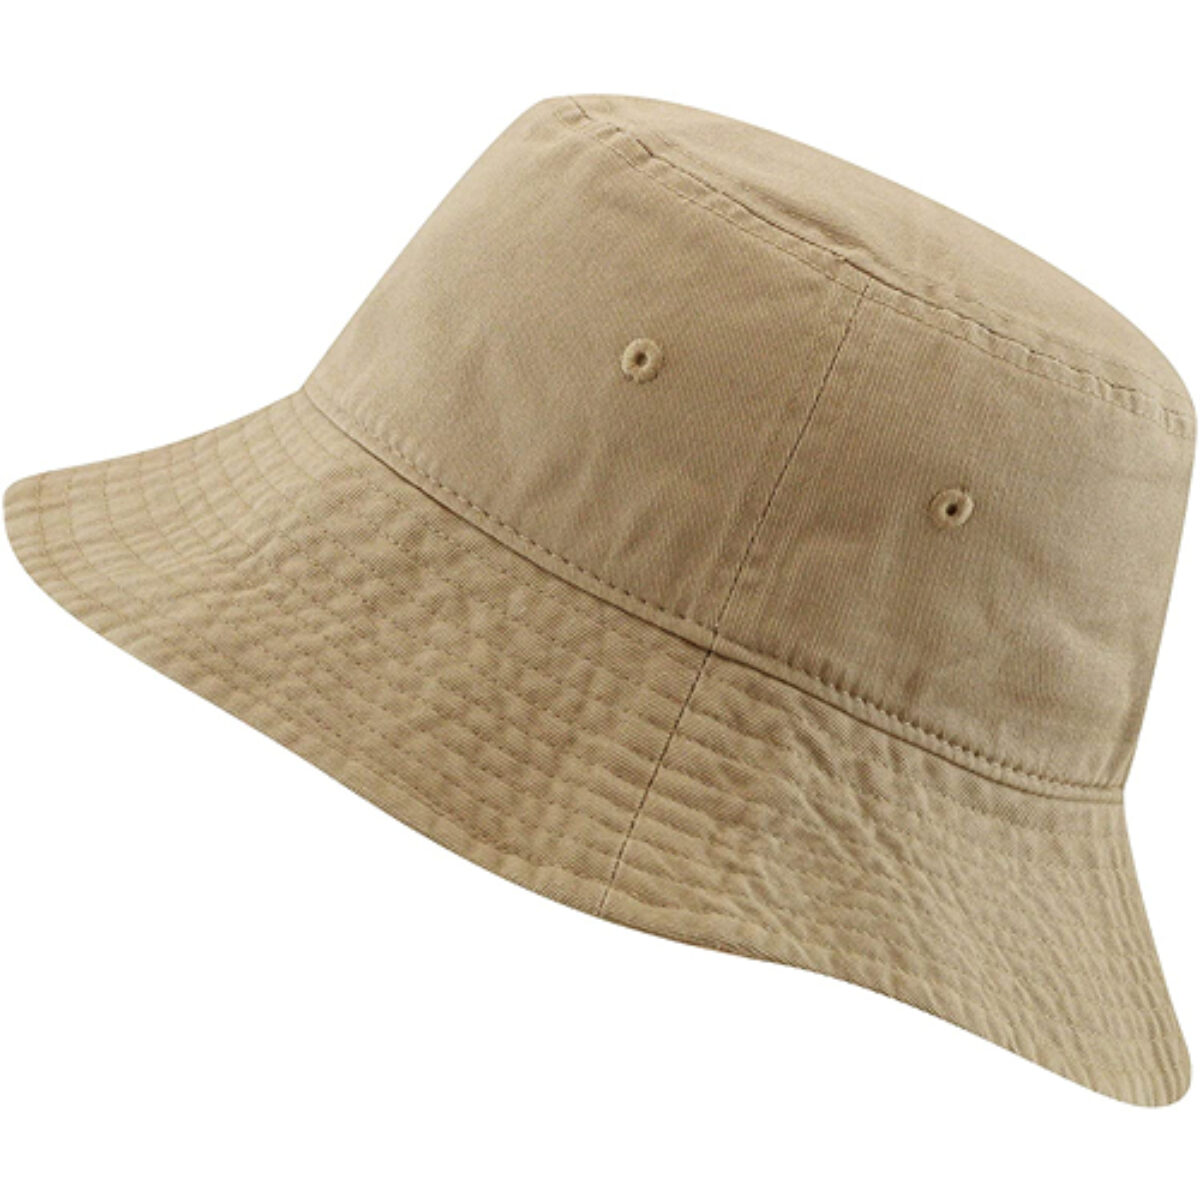 Zipper-G Cotton Bucket Hat Unisex For Summer Beach Vacation